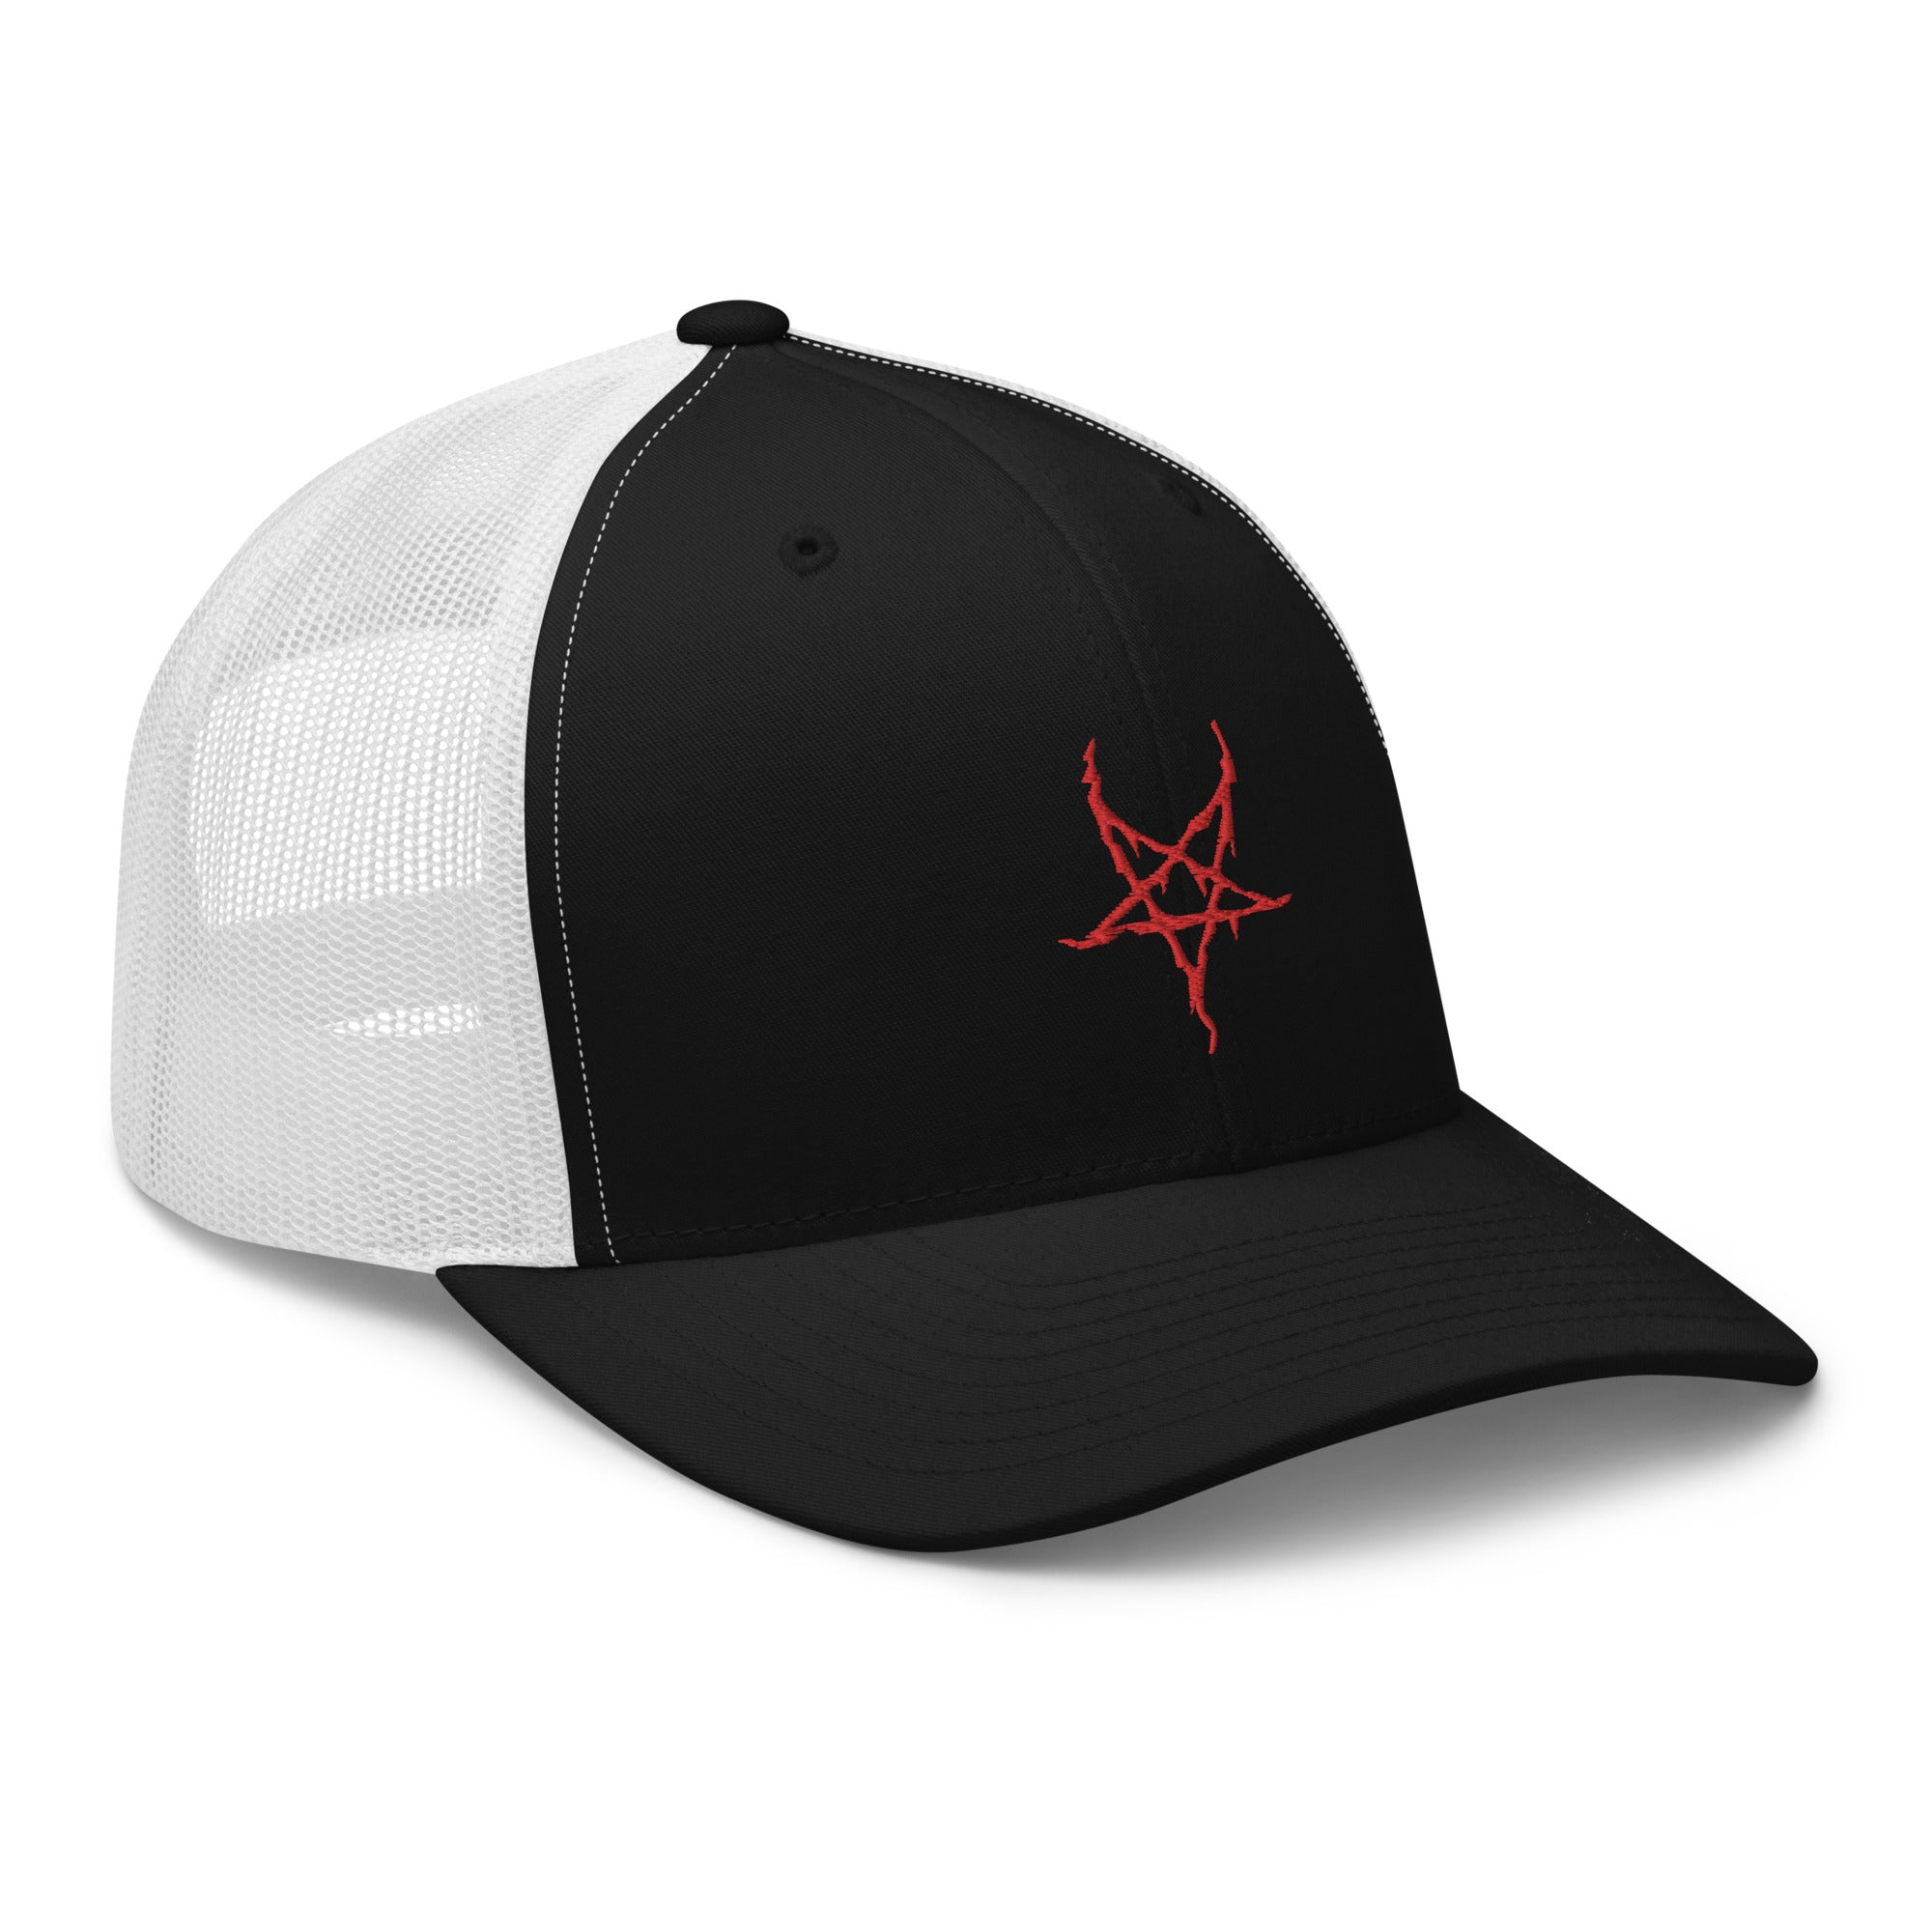 Red Inverted Pentagram Black Metal Style Embroidered Trucker Cap Snapback Hat